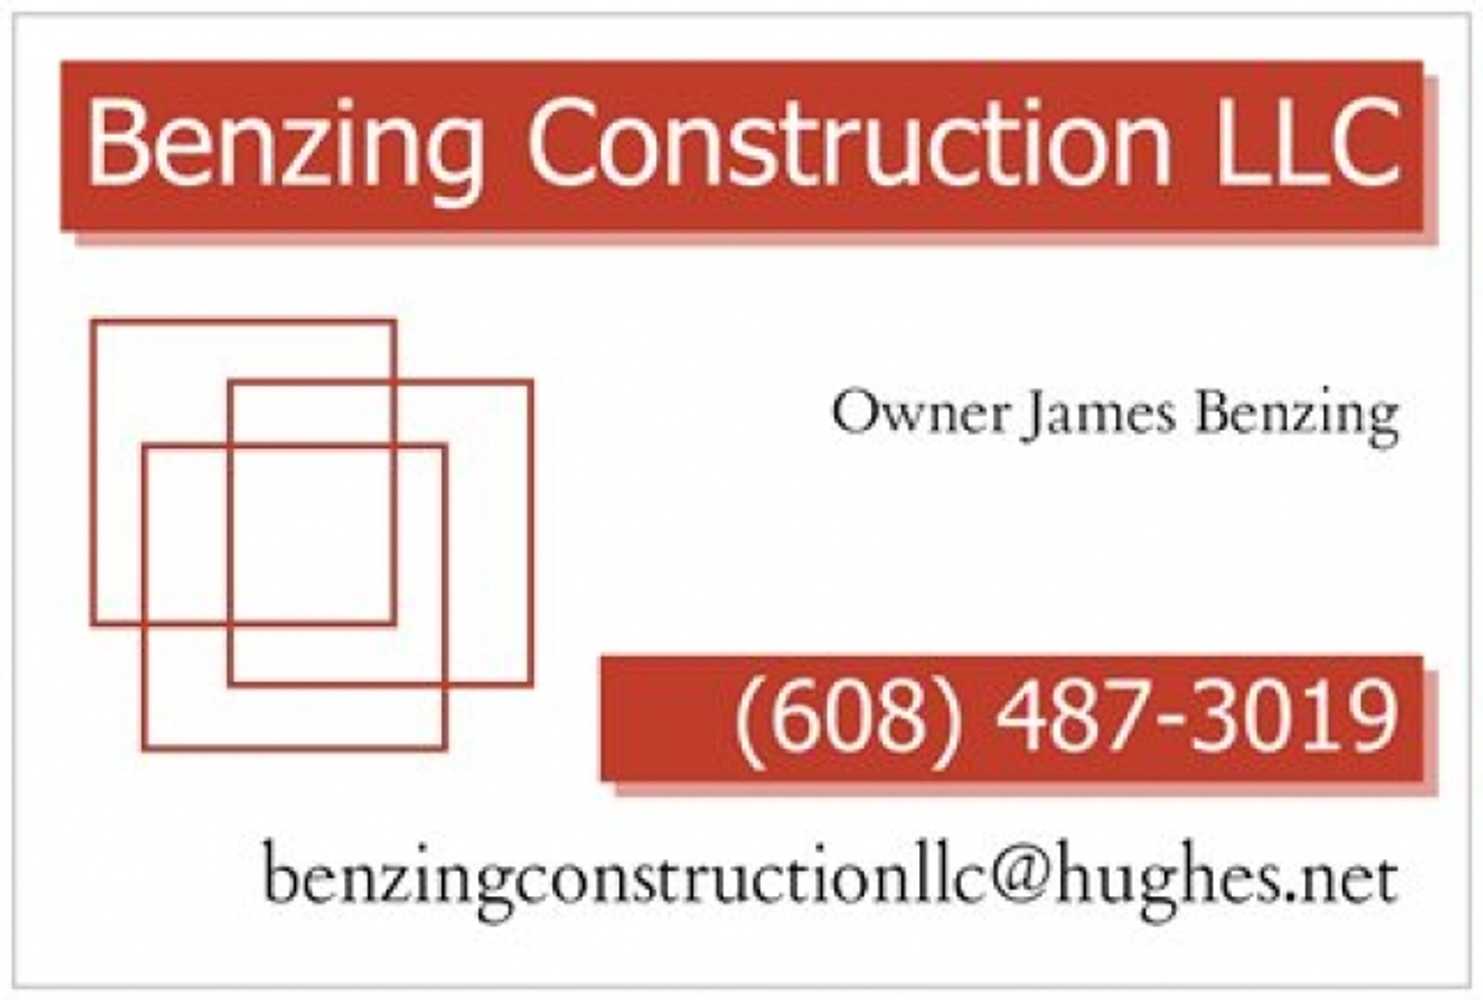 Benzing Construction LLC